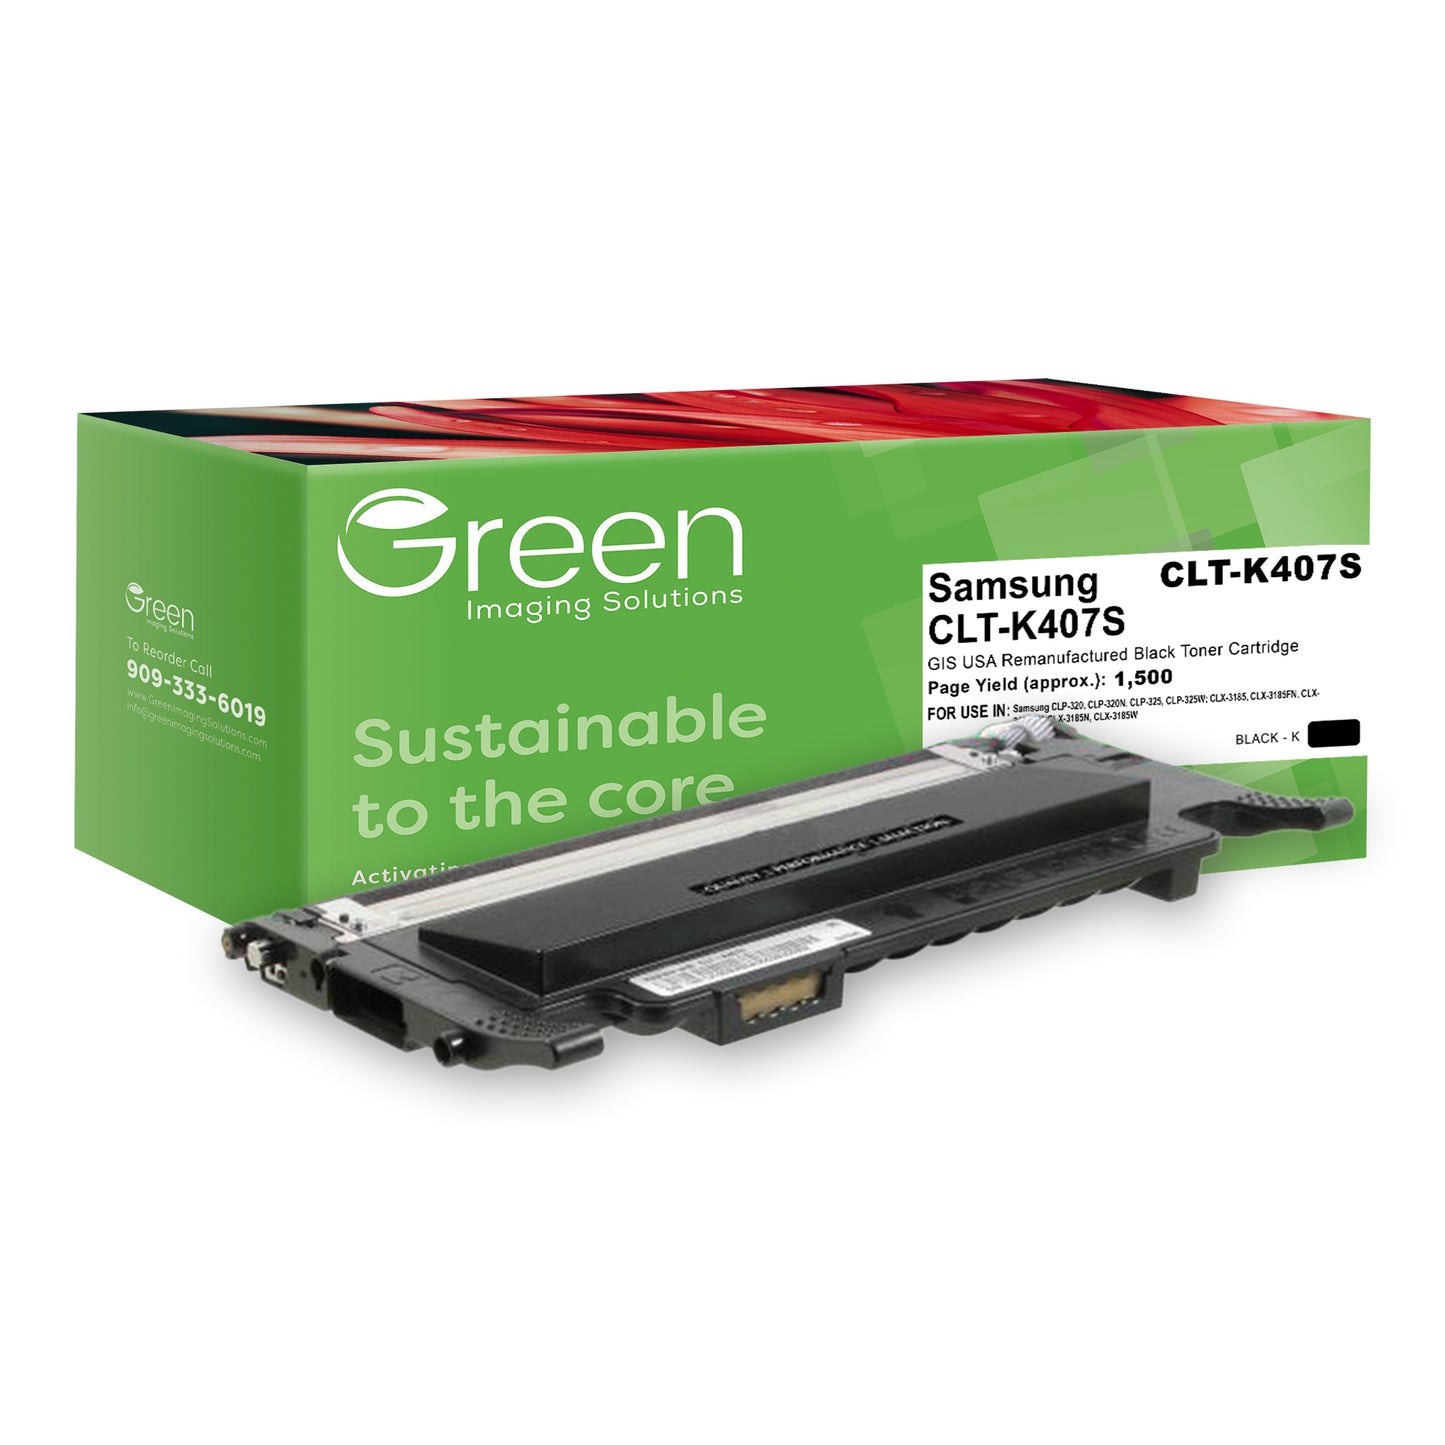 Green Imaging Solutions USA Remanufactured Black Toner Cartridge for Samsung CLT-K407S